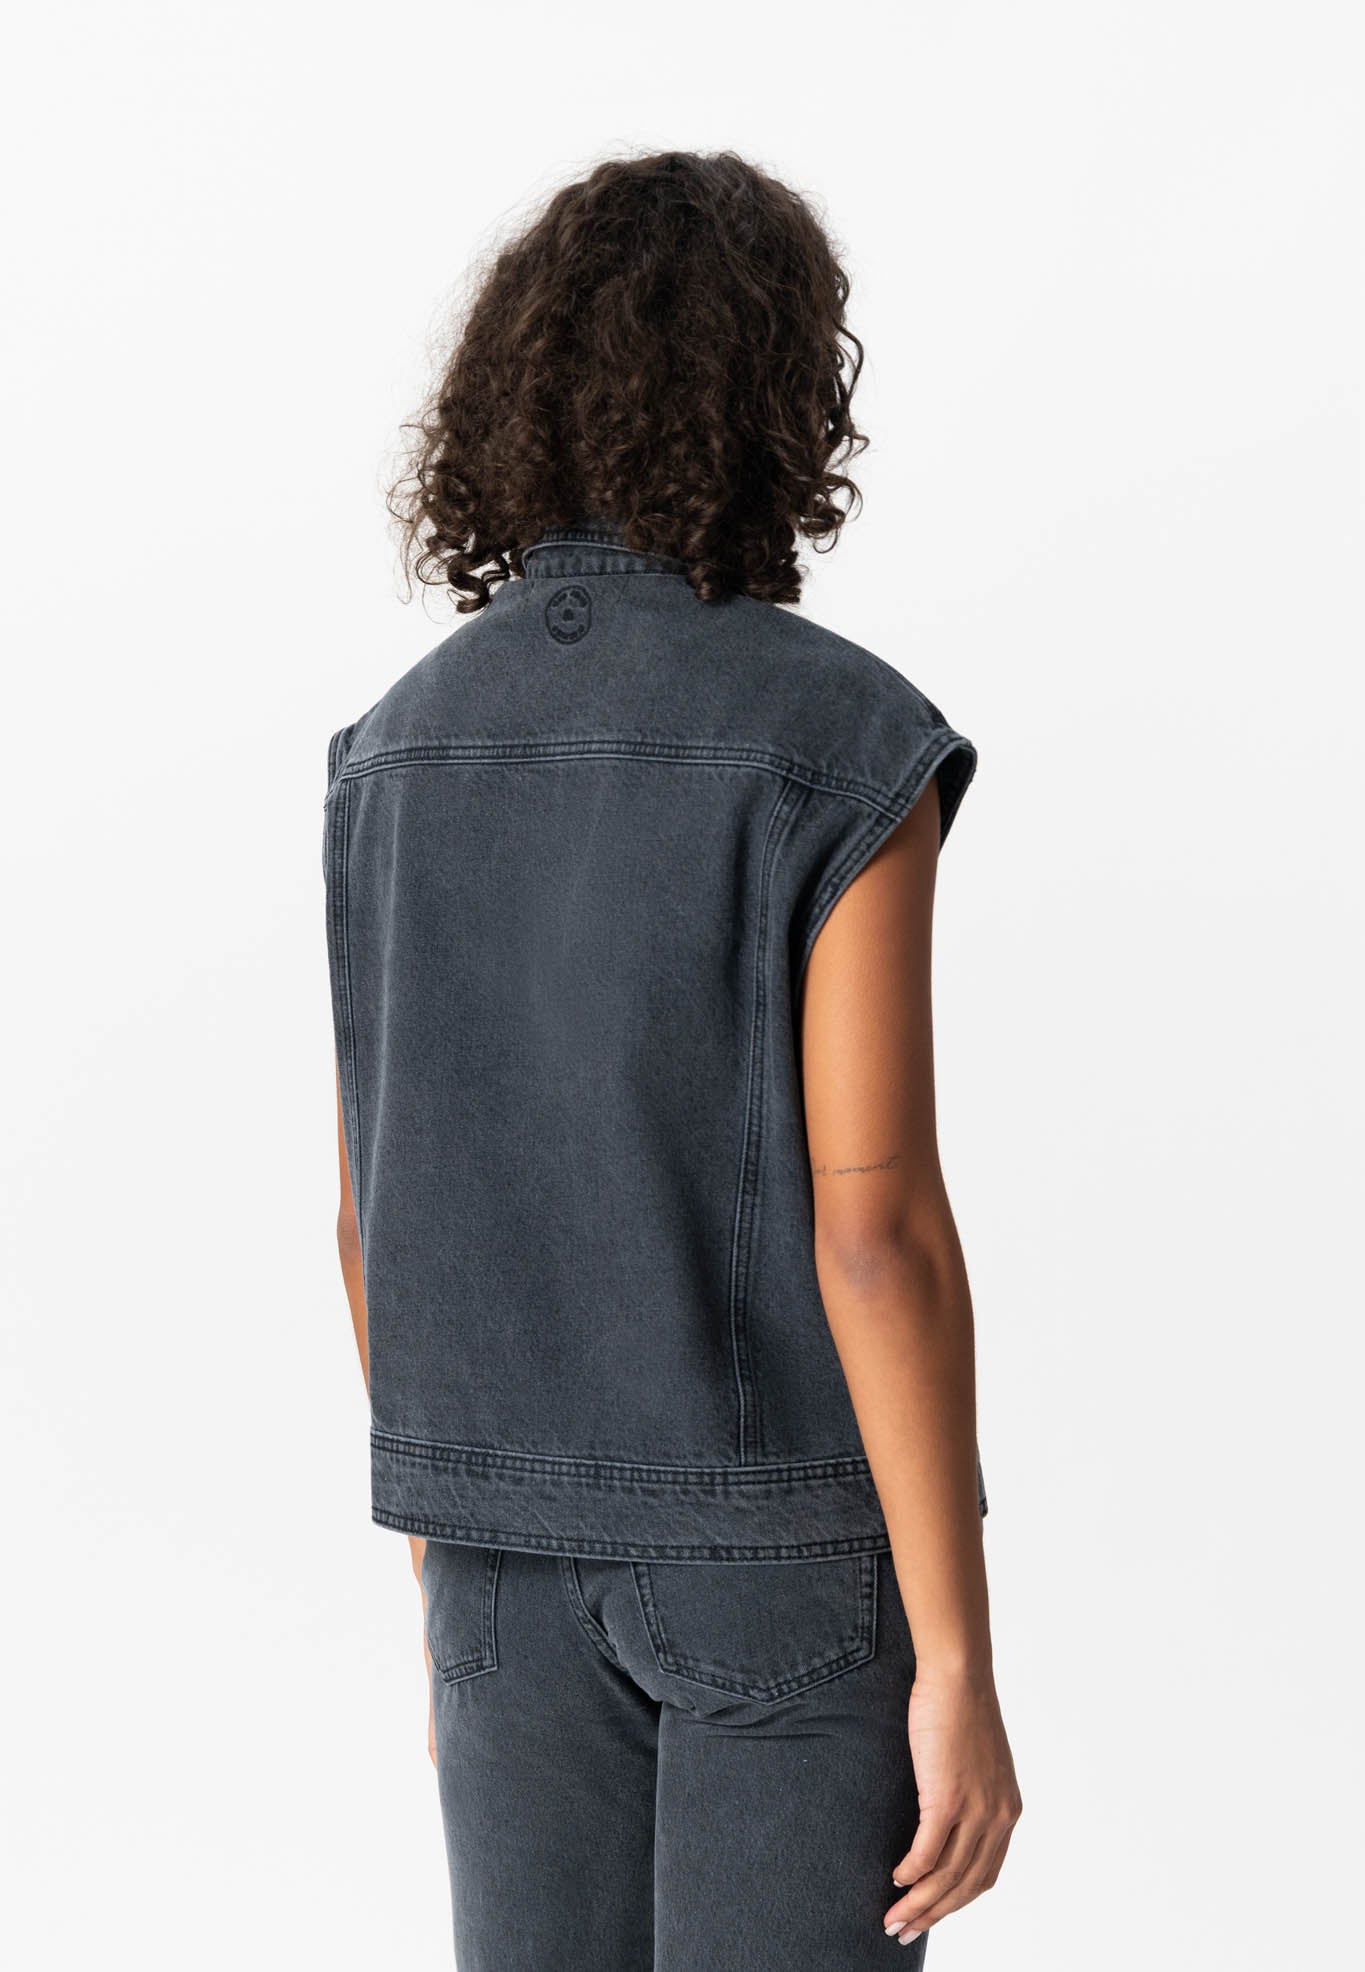 Women - MUD Jeans - Vivian Vest - Used Black